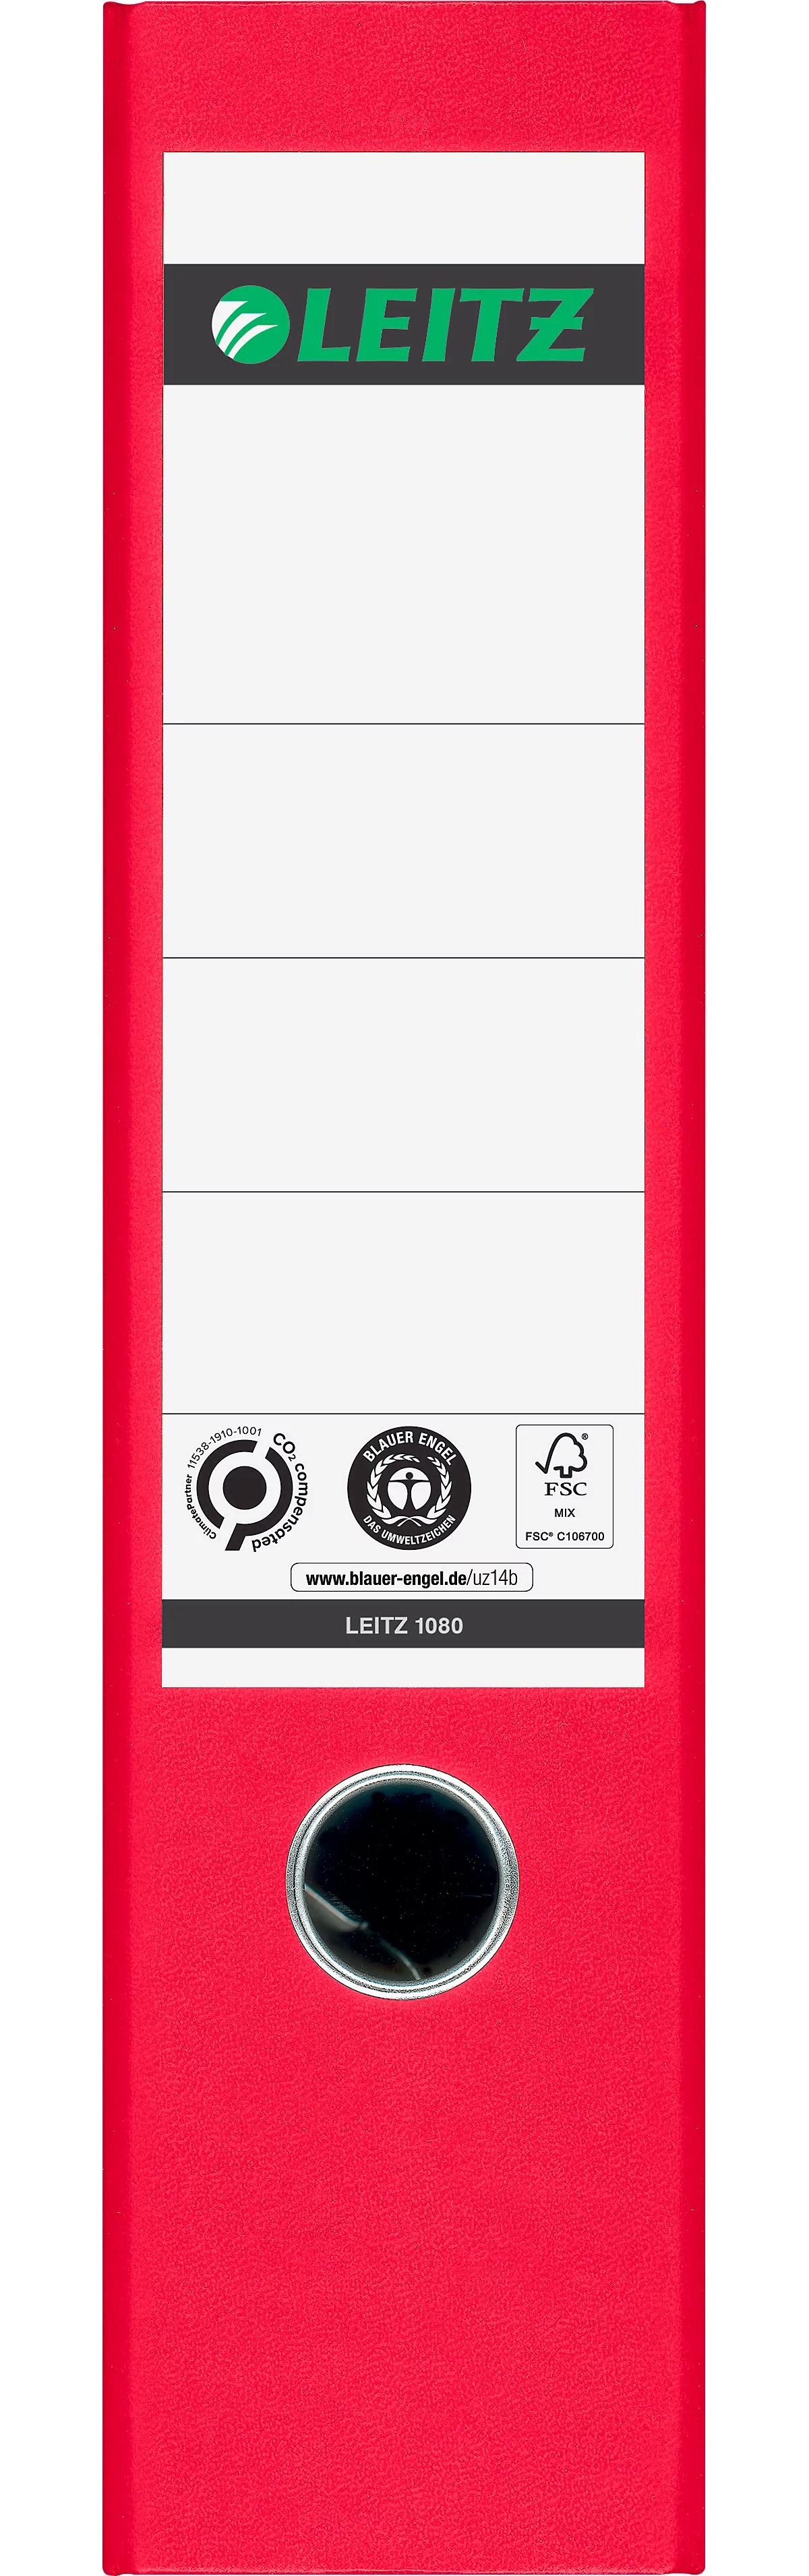 Carpeta LEITZ® 1080, DIN A4, ancho de lomo 80 mm, agujero para los dedos, etiqueta de lomo pegada, clima neutro, cartón duro, 1 unidad, rojo